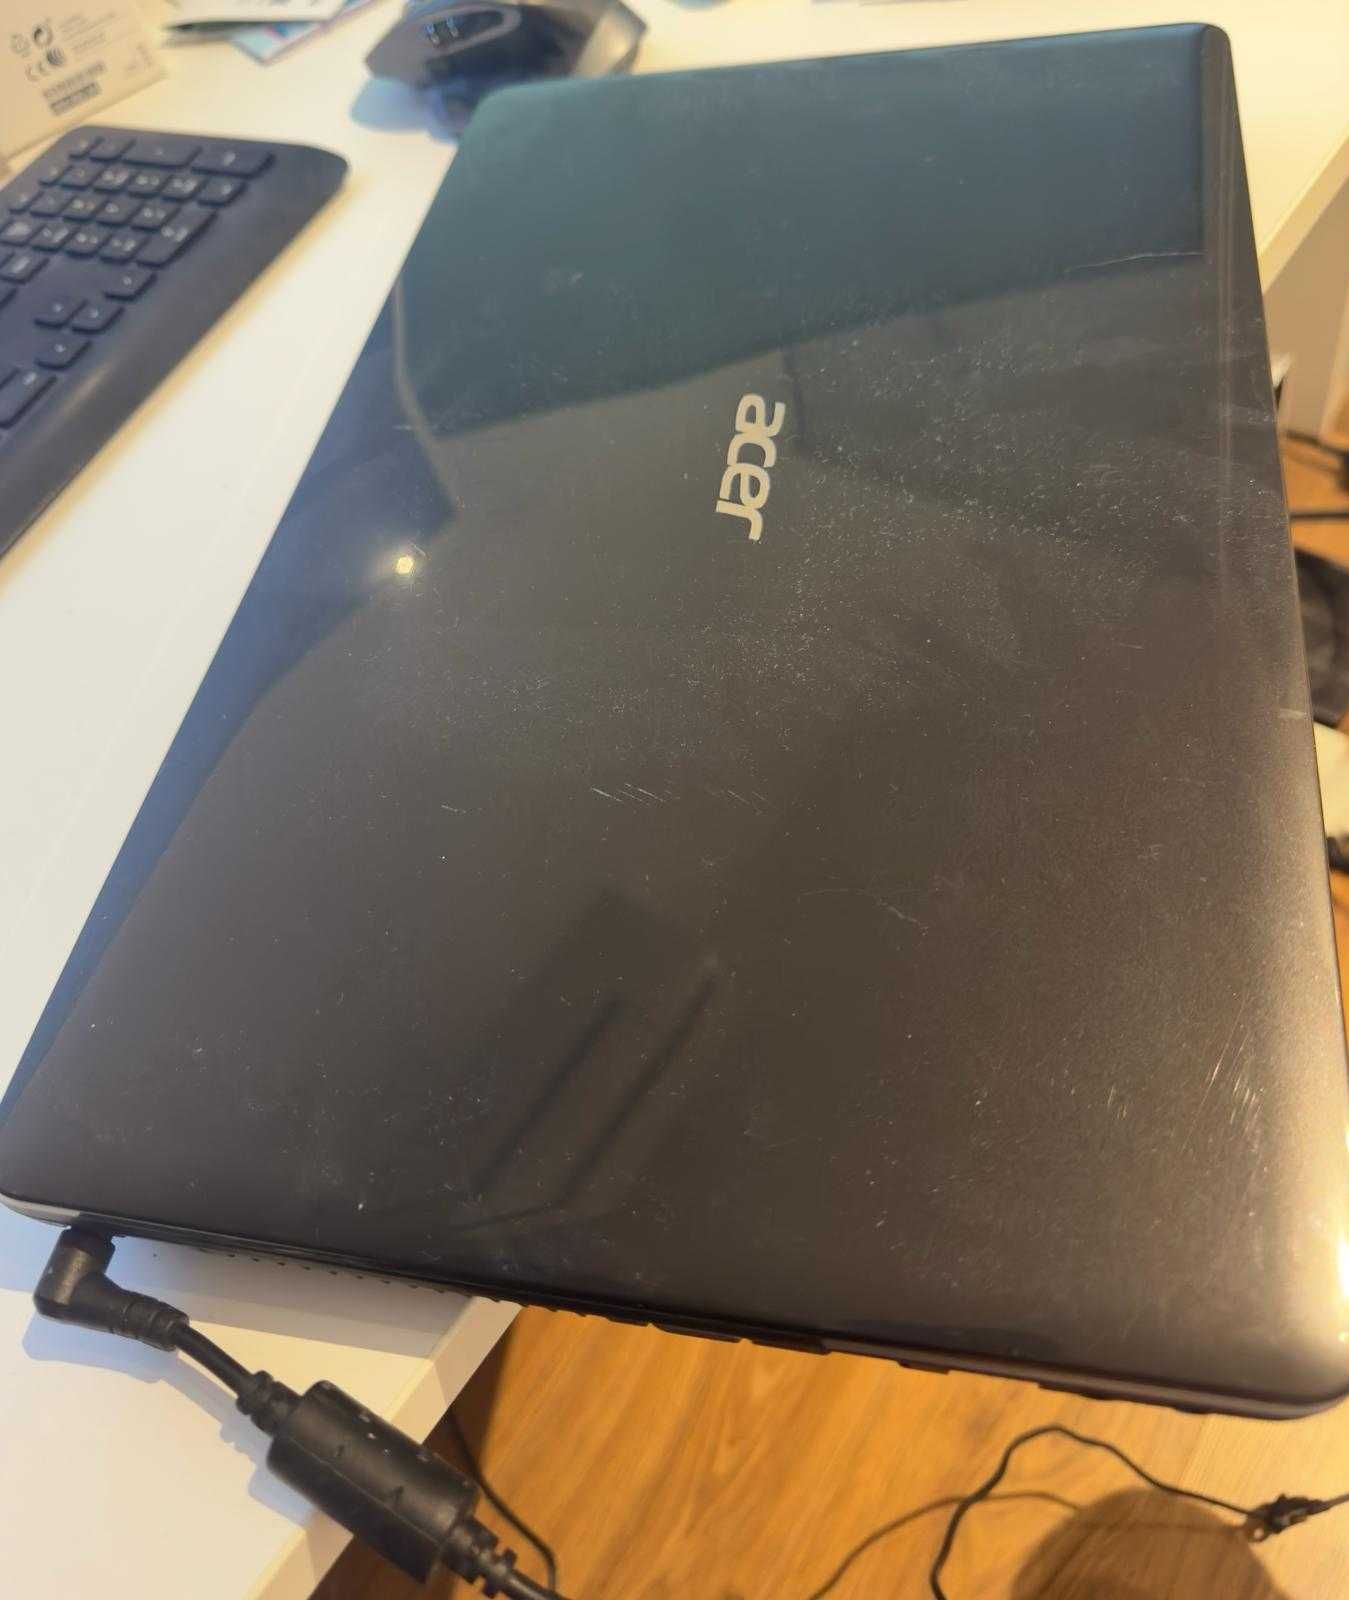 Vand Laptop Acer E1-571G, i7,4gb,Video 2gb,500gb,15.6" + Bonus Tableta